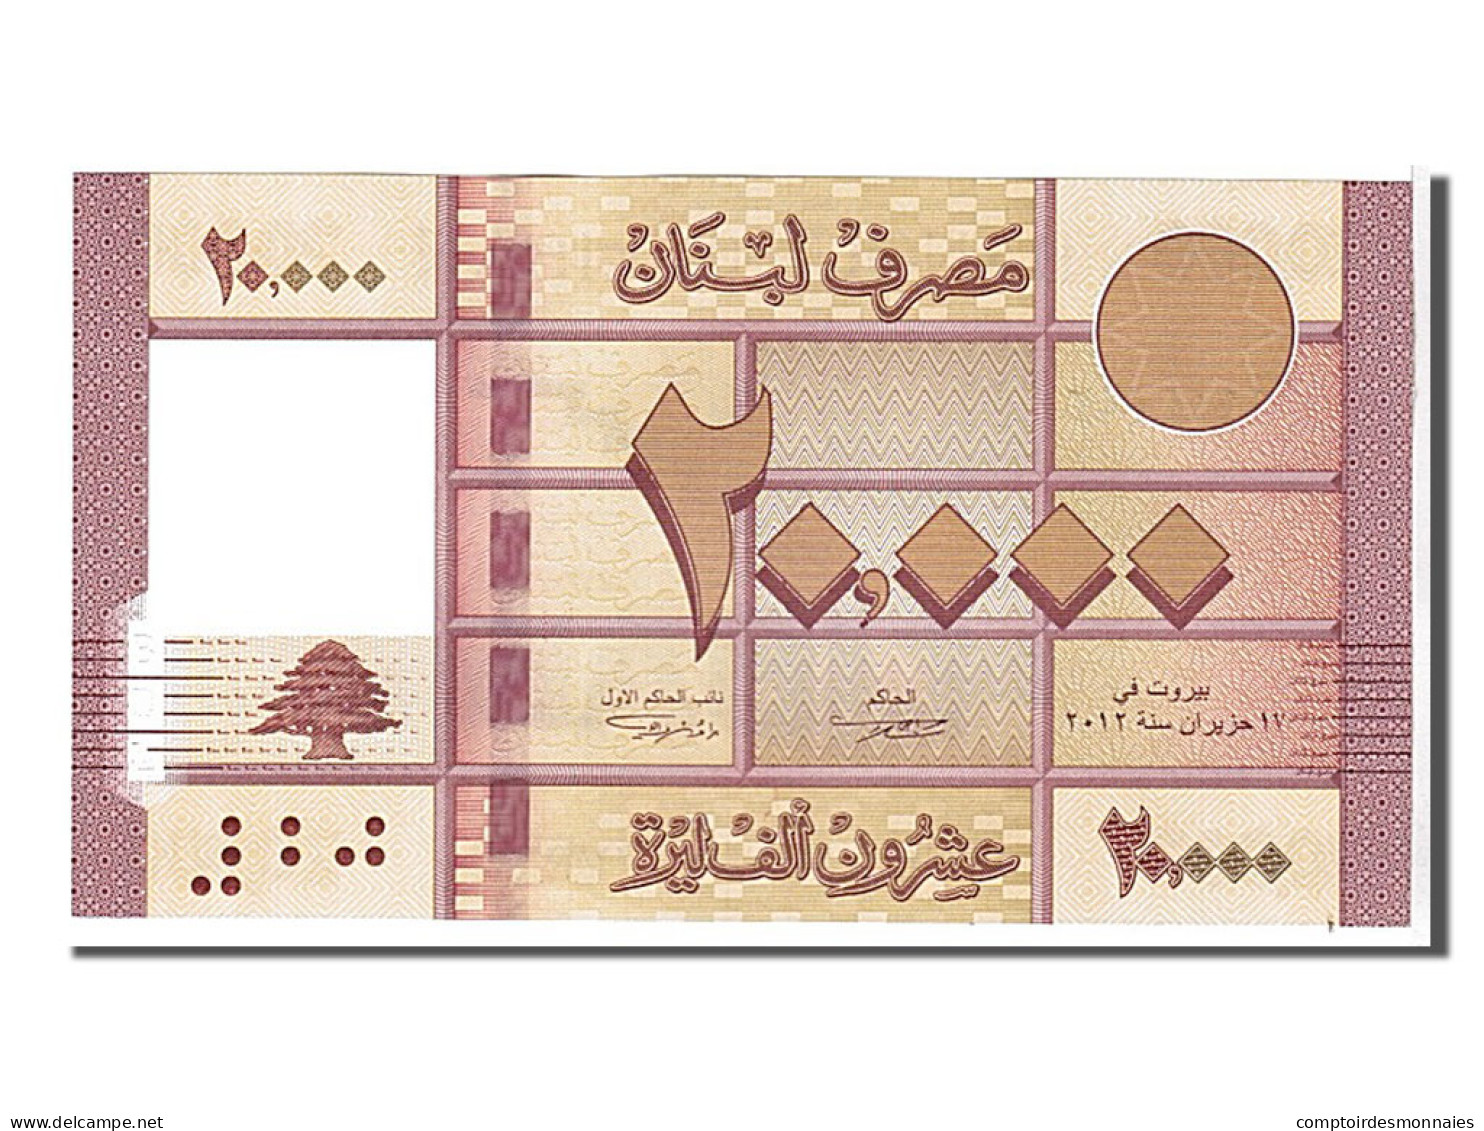 Billet, Lebanon, 20,000 Livres, 2012, NEUF - Libano